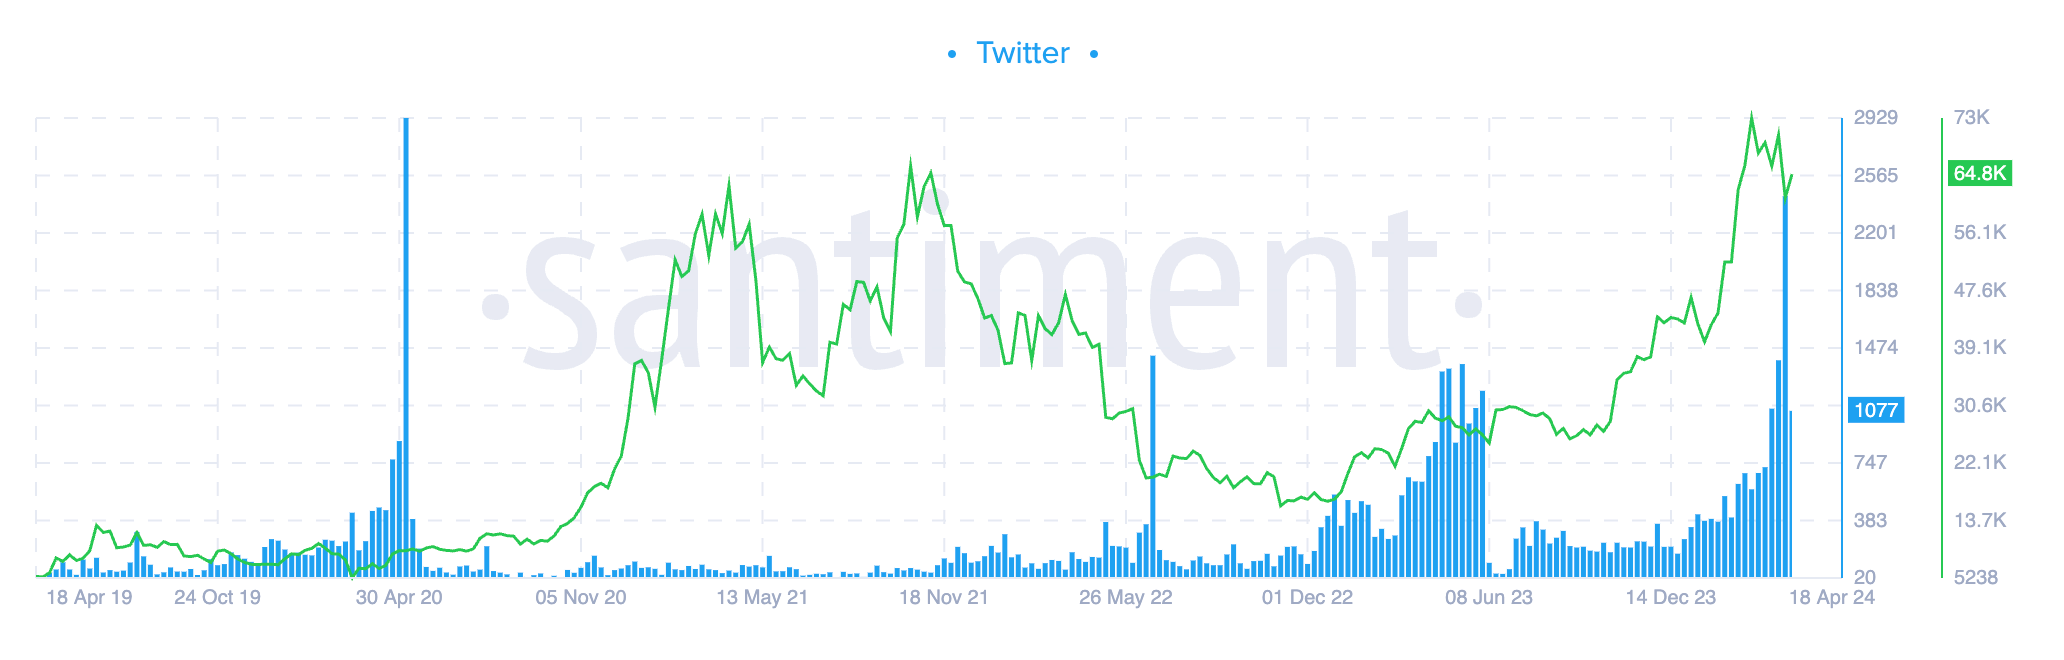 Bitcoin mengurangkan separuh minat Twitter (Santiment)